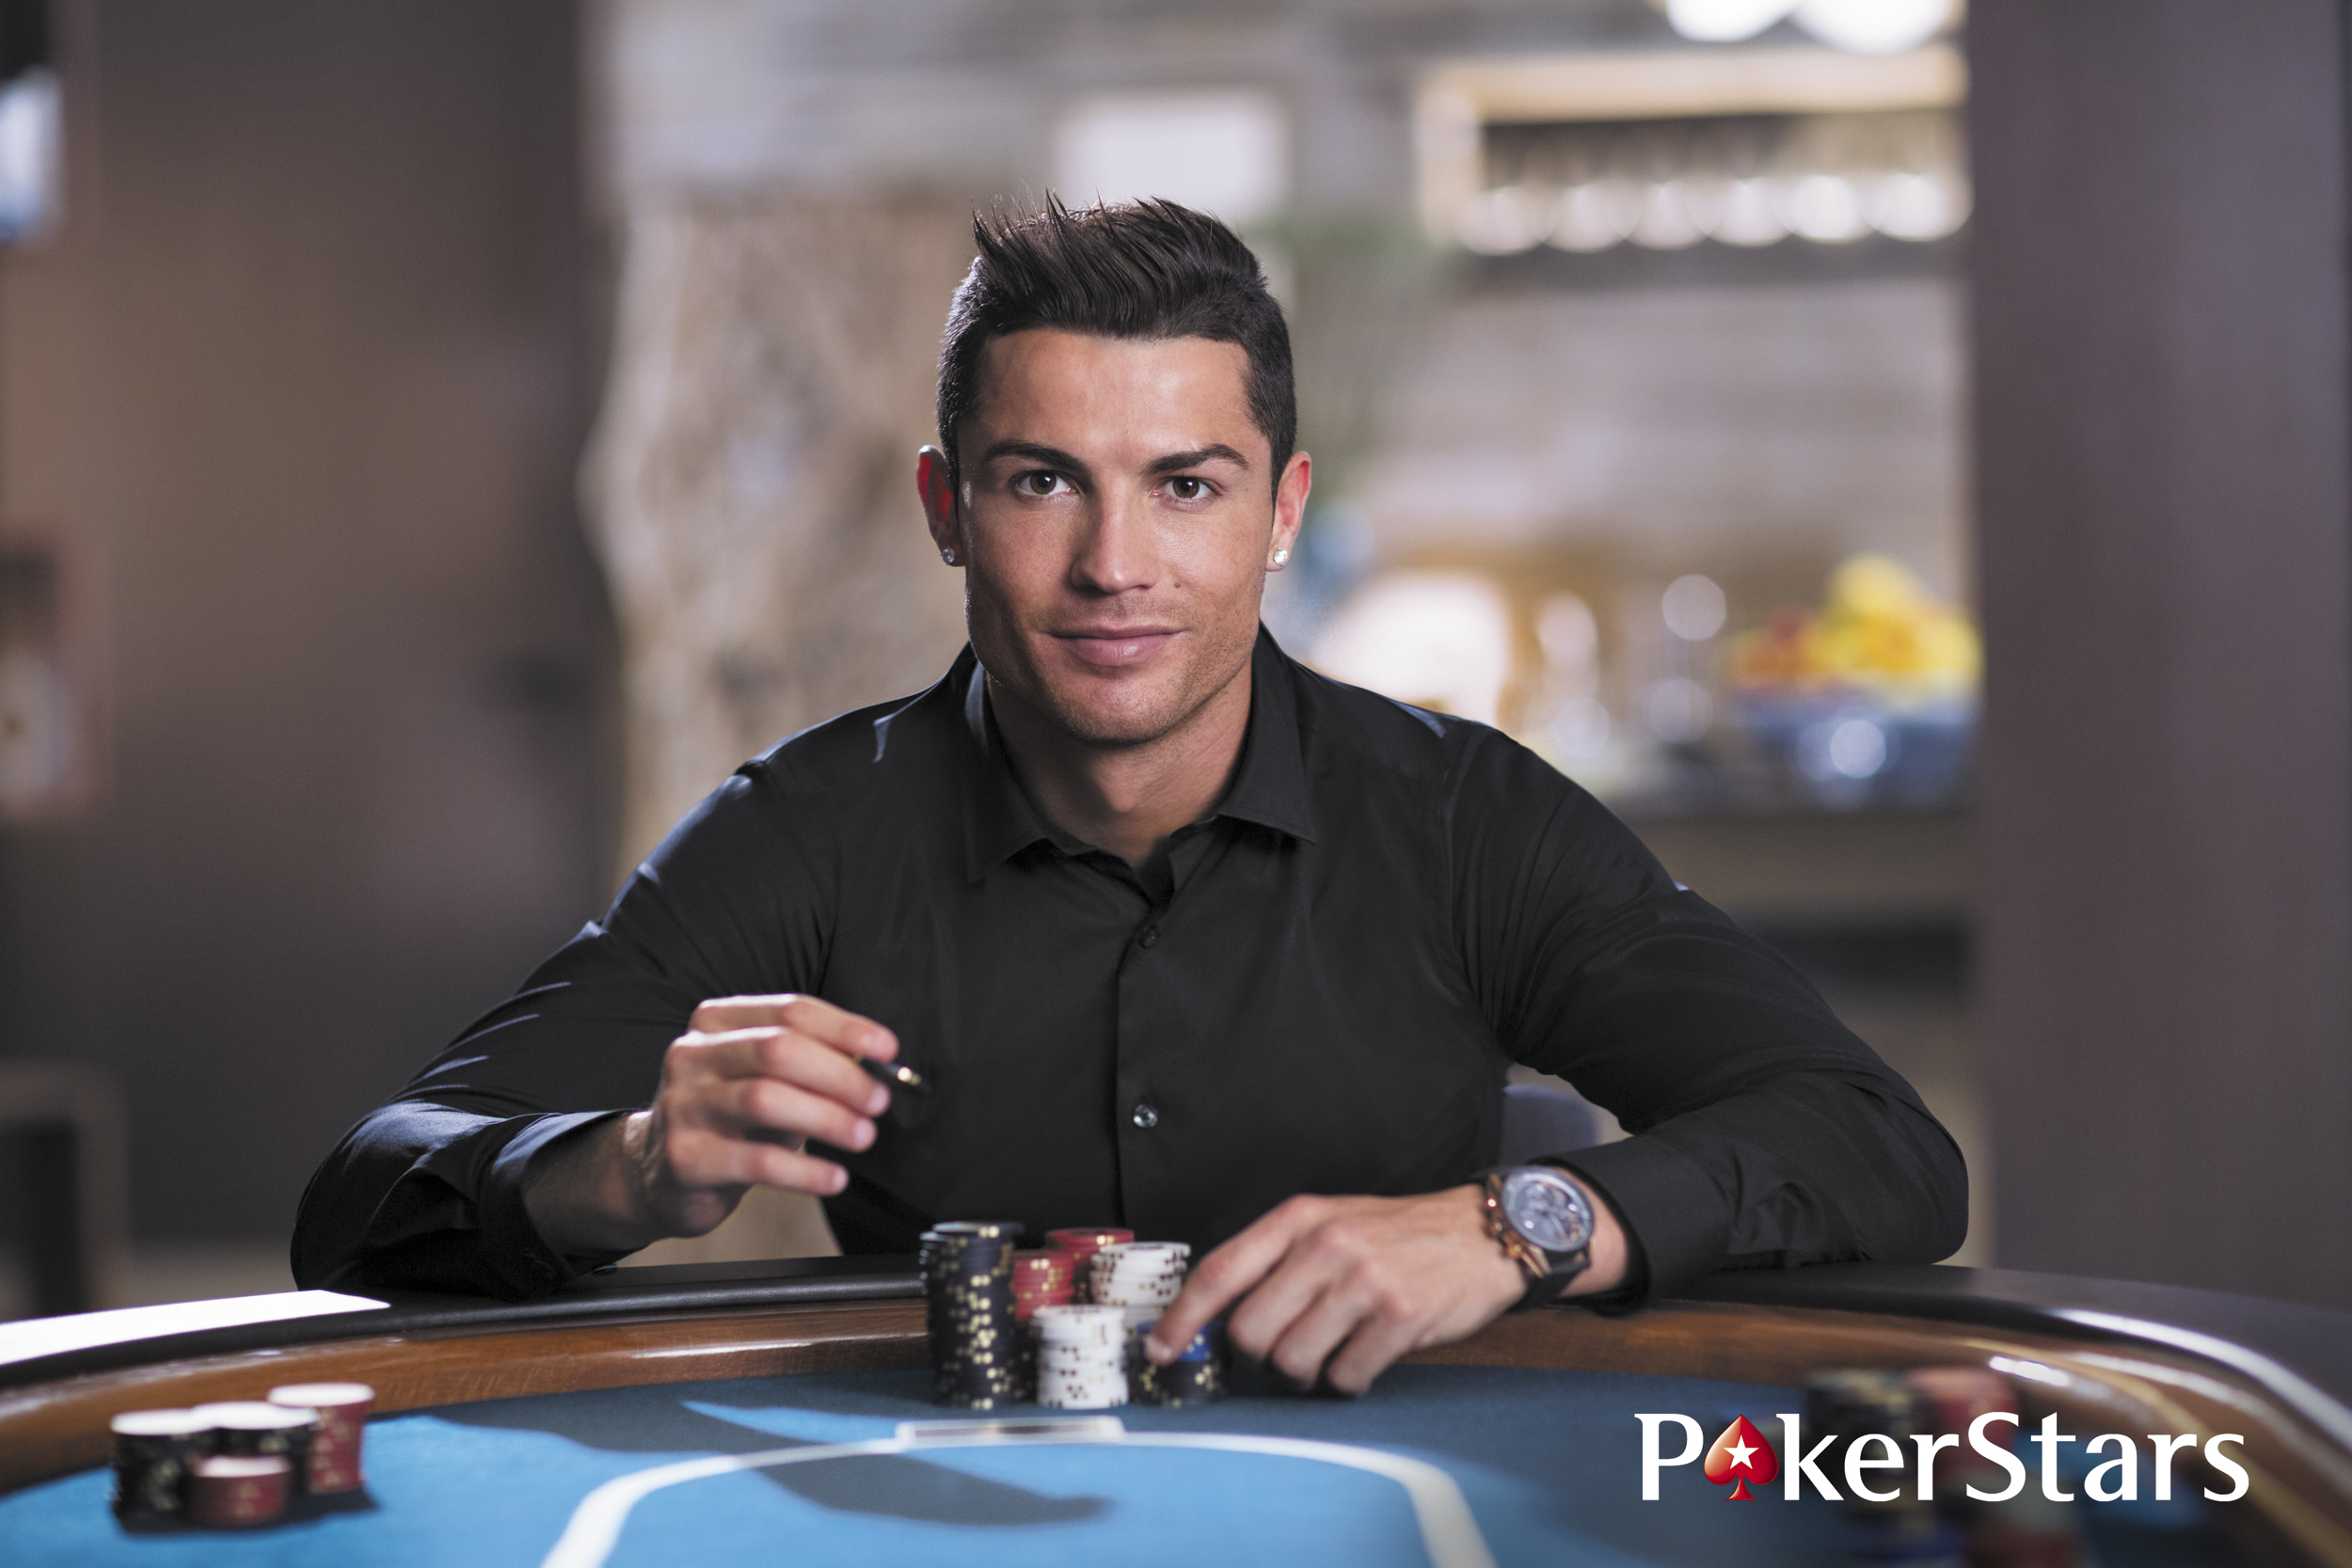 Poker Ambassador Site Endorsements Among New Jersey Regulatory Proposed Changes